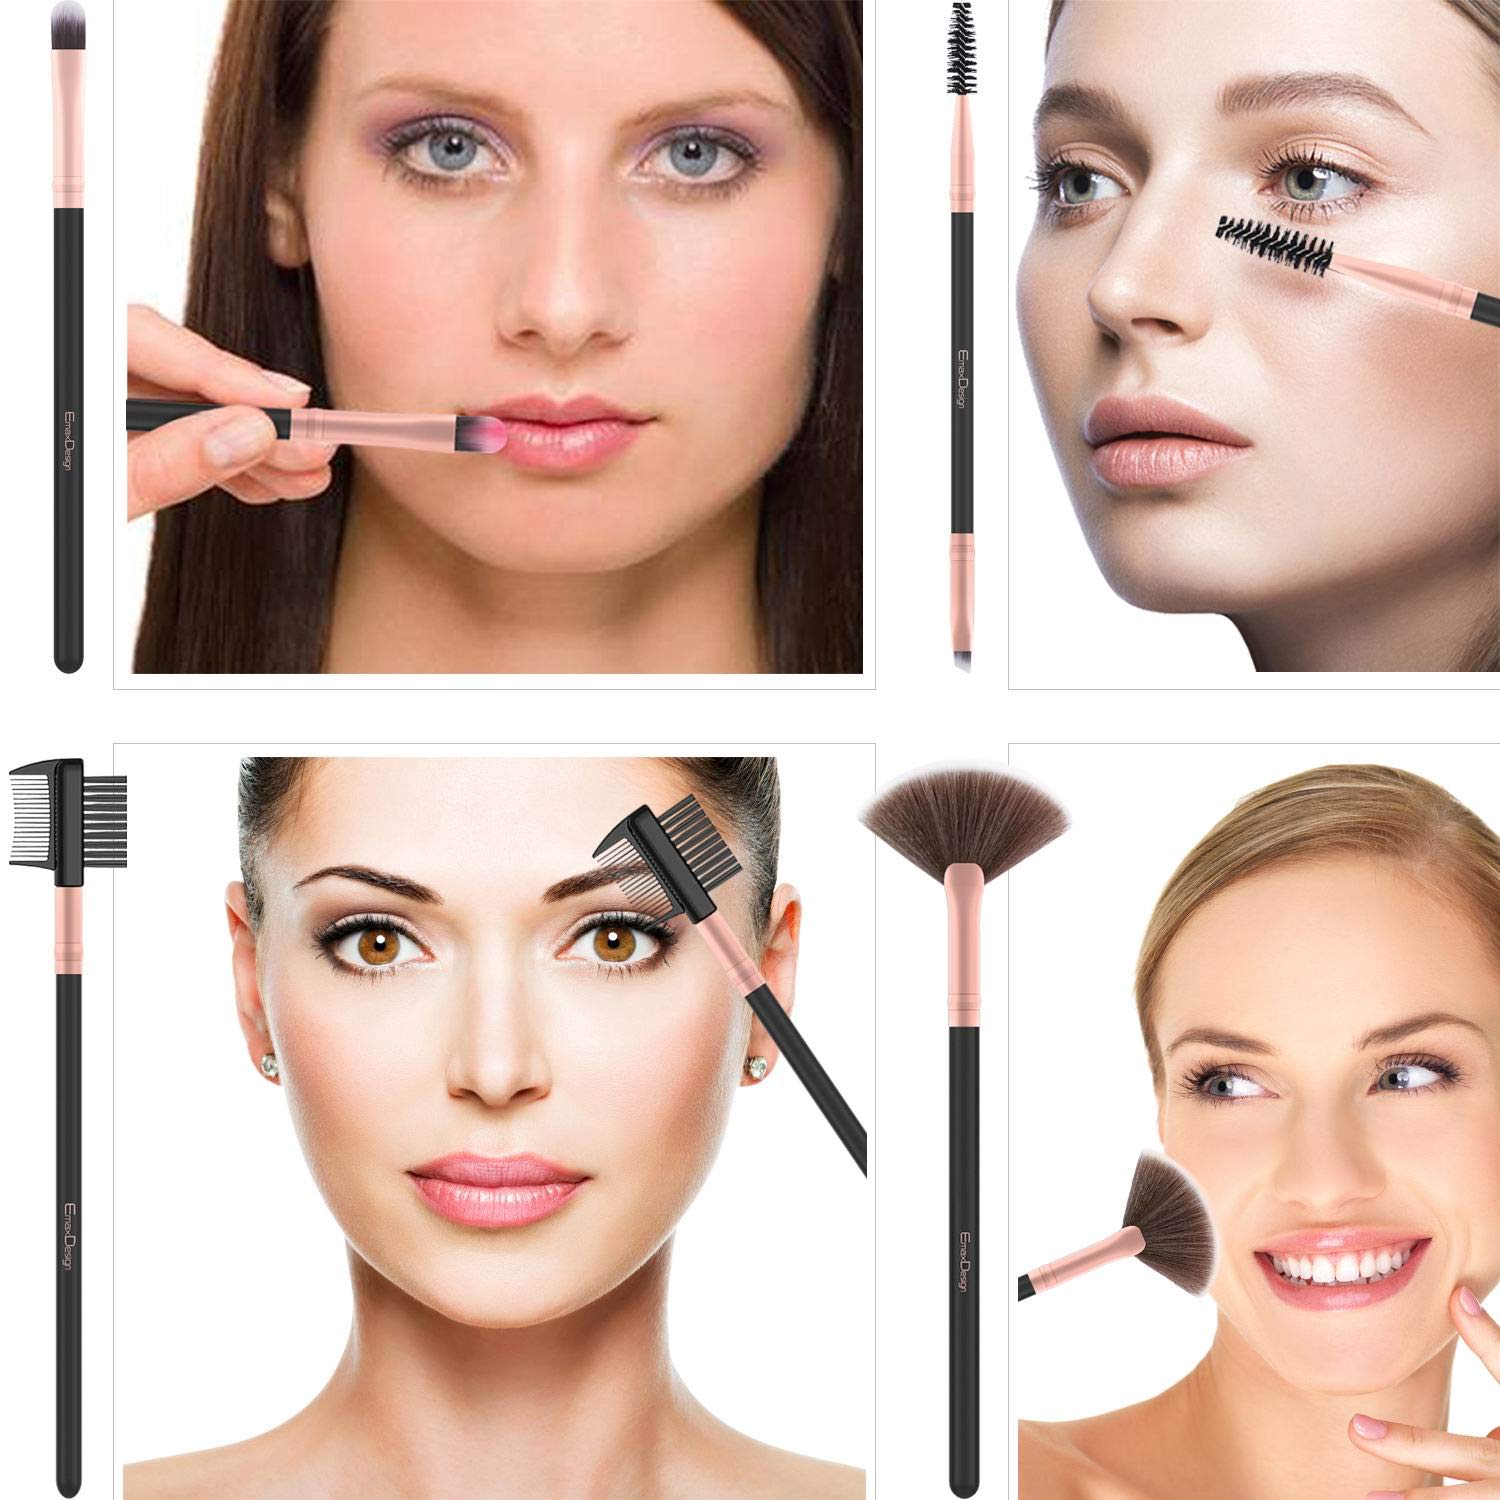 EmaxDesign Makeup Brushes 17 Pieces Premium Synthetic Foundation Brush Powder Blending Blush Concealer Eye Face Liquid Powder Cream Cosmetics Brushes Kit (Rose Gold)